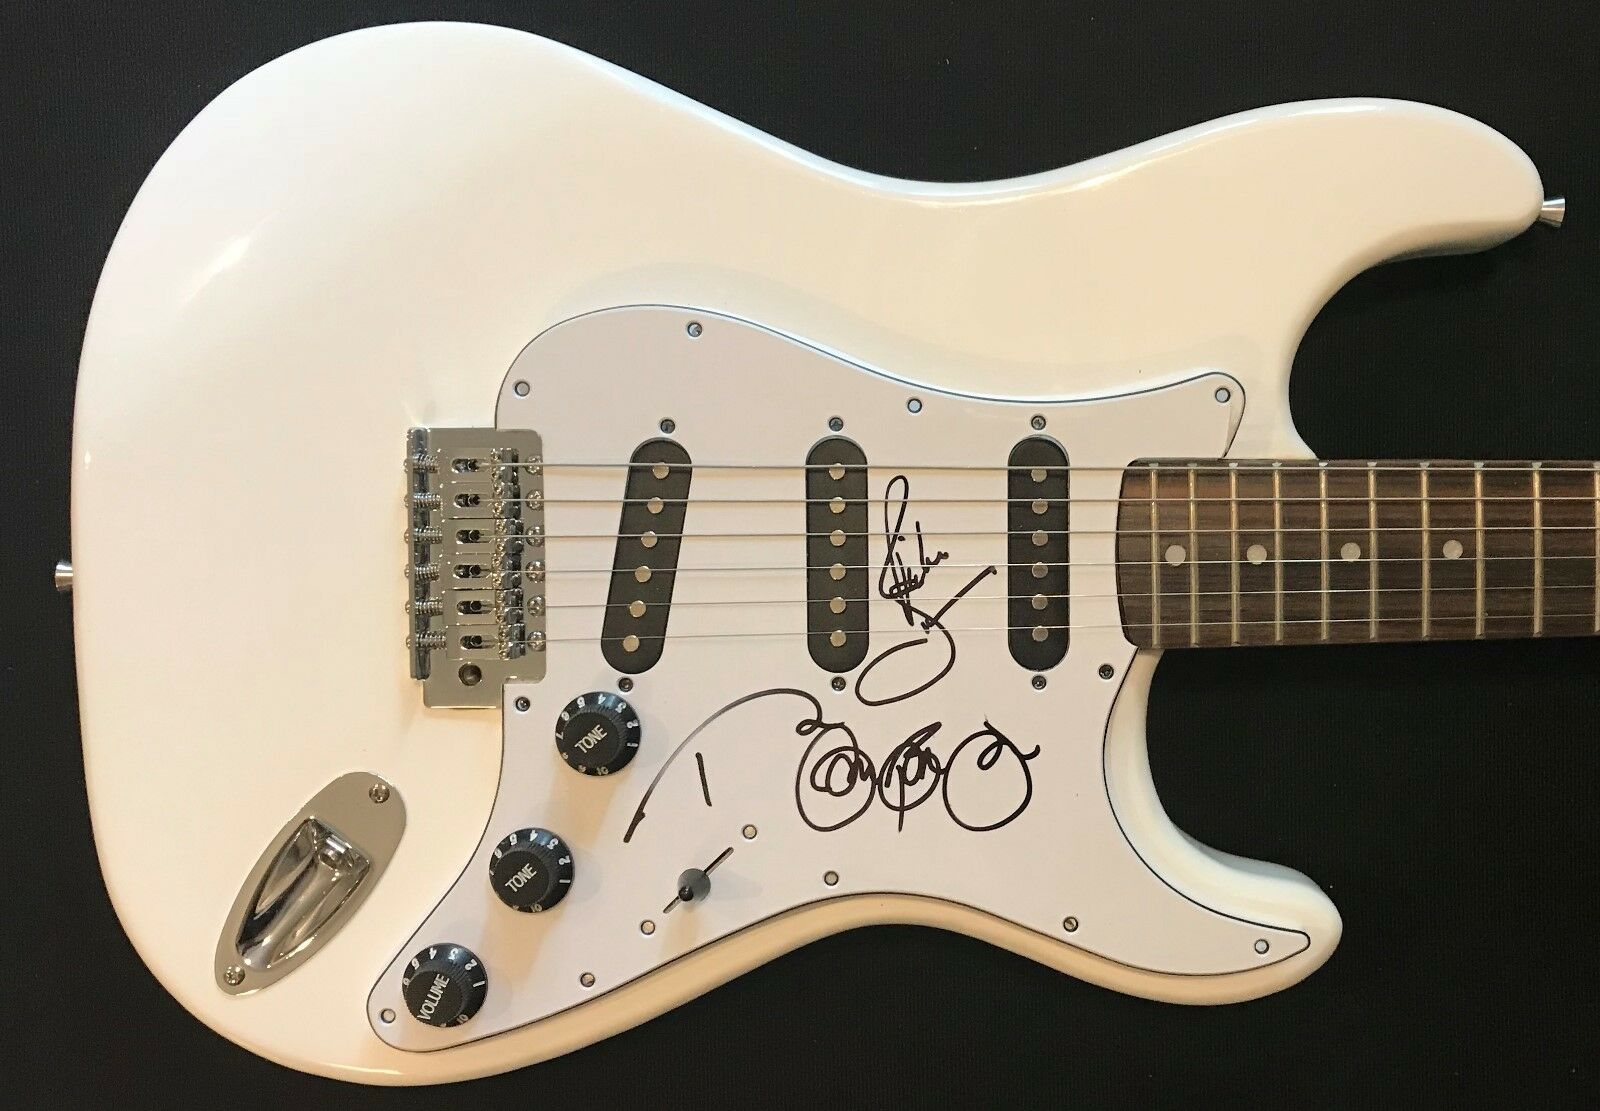 Bon Jovi Signed Guitar Jon Bon Jovi Autographed Guitar Richie Sambora Tico Tores